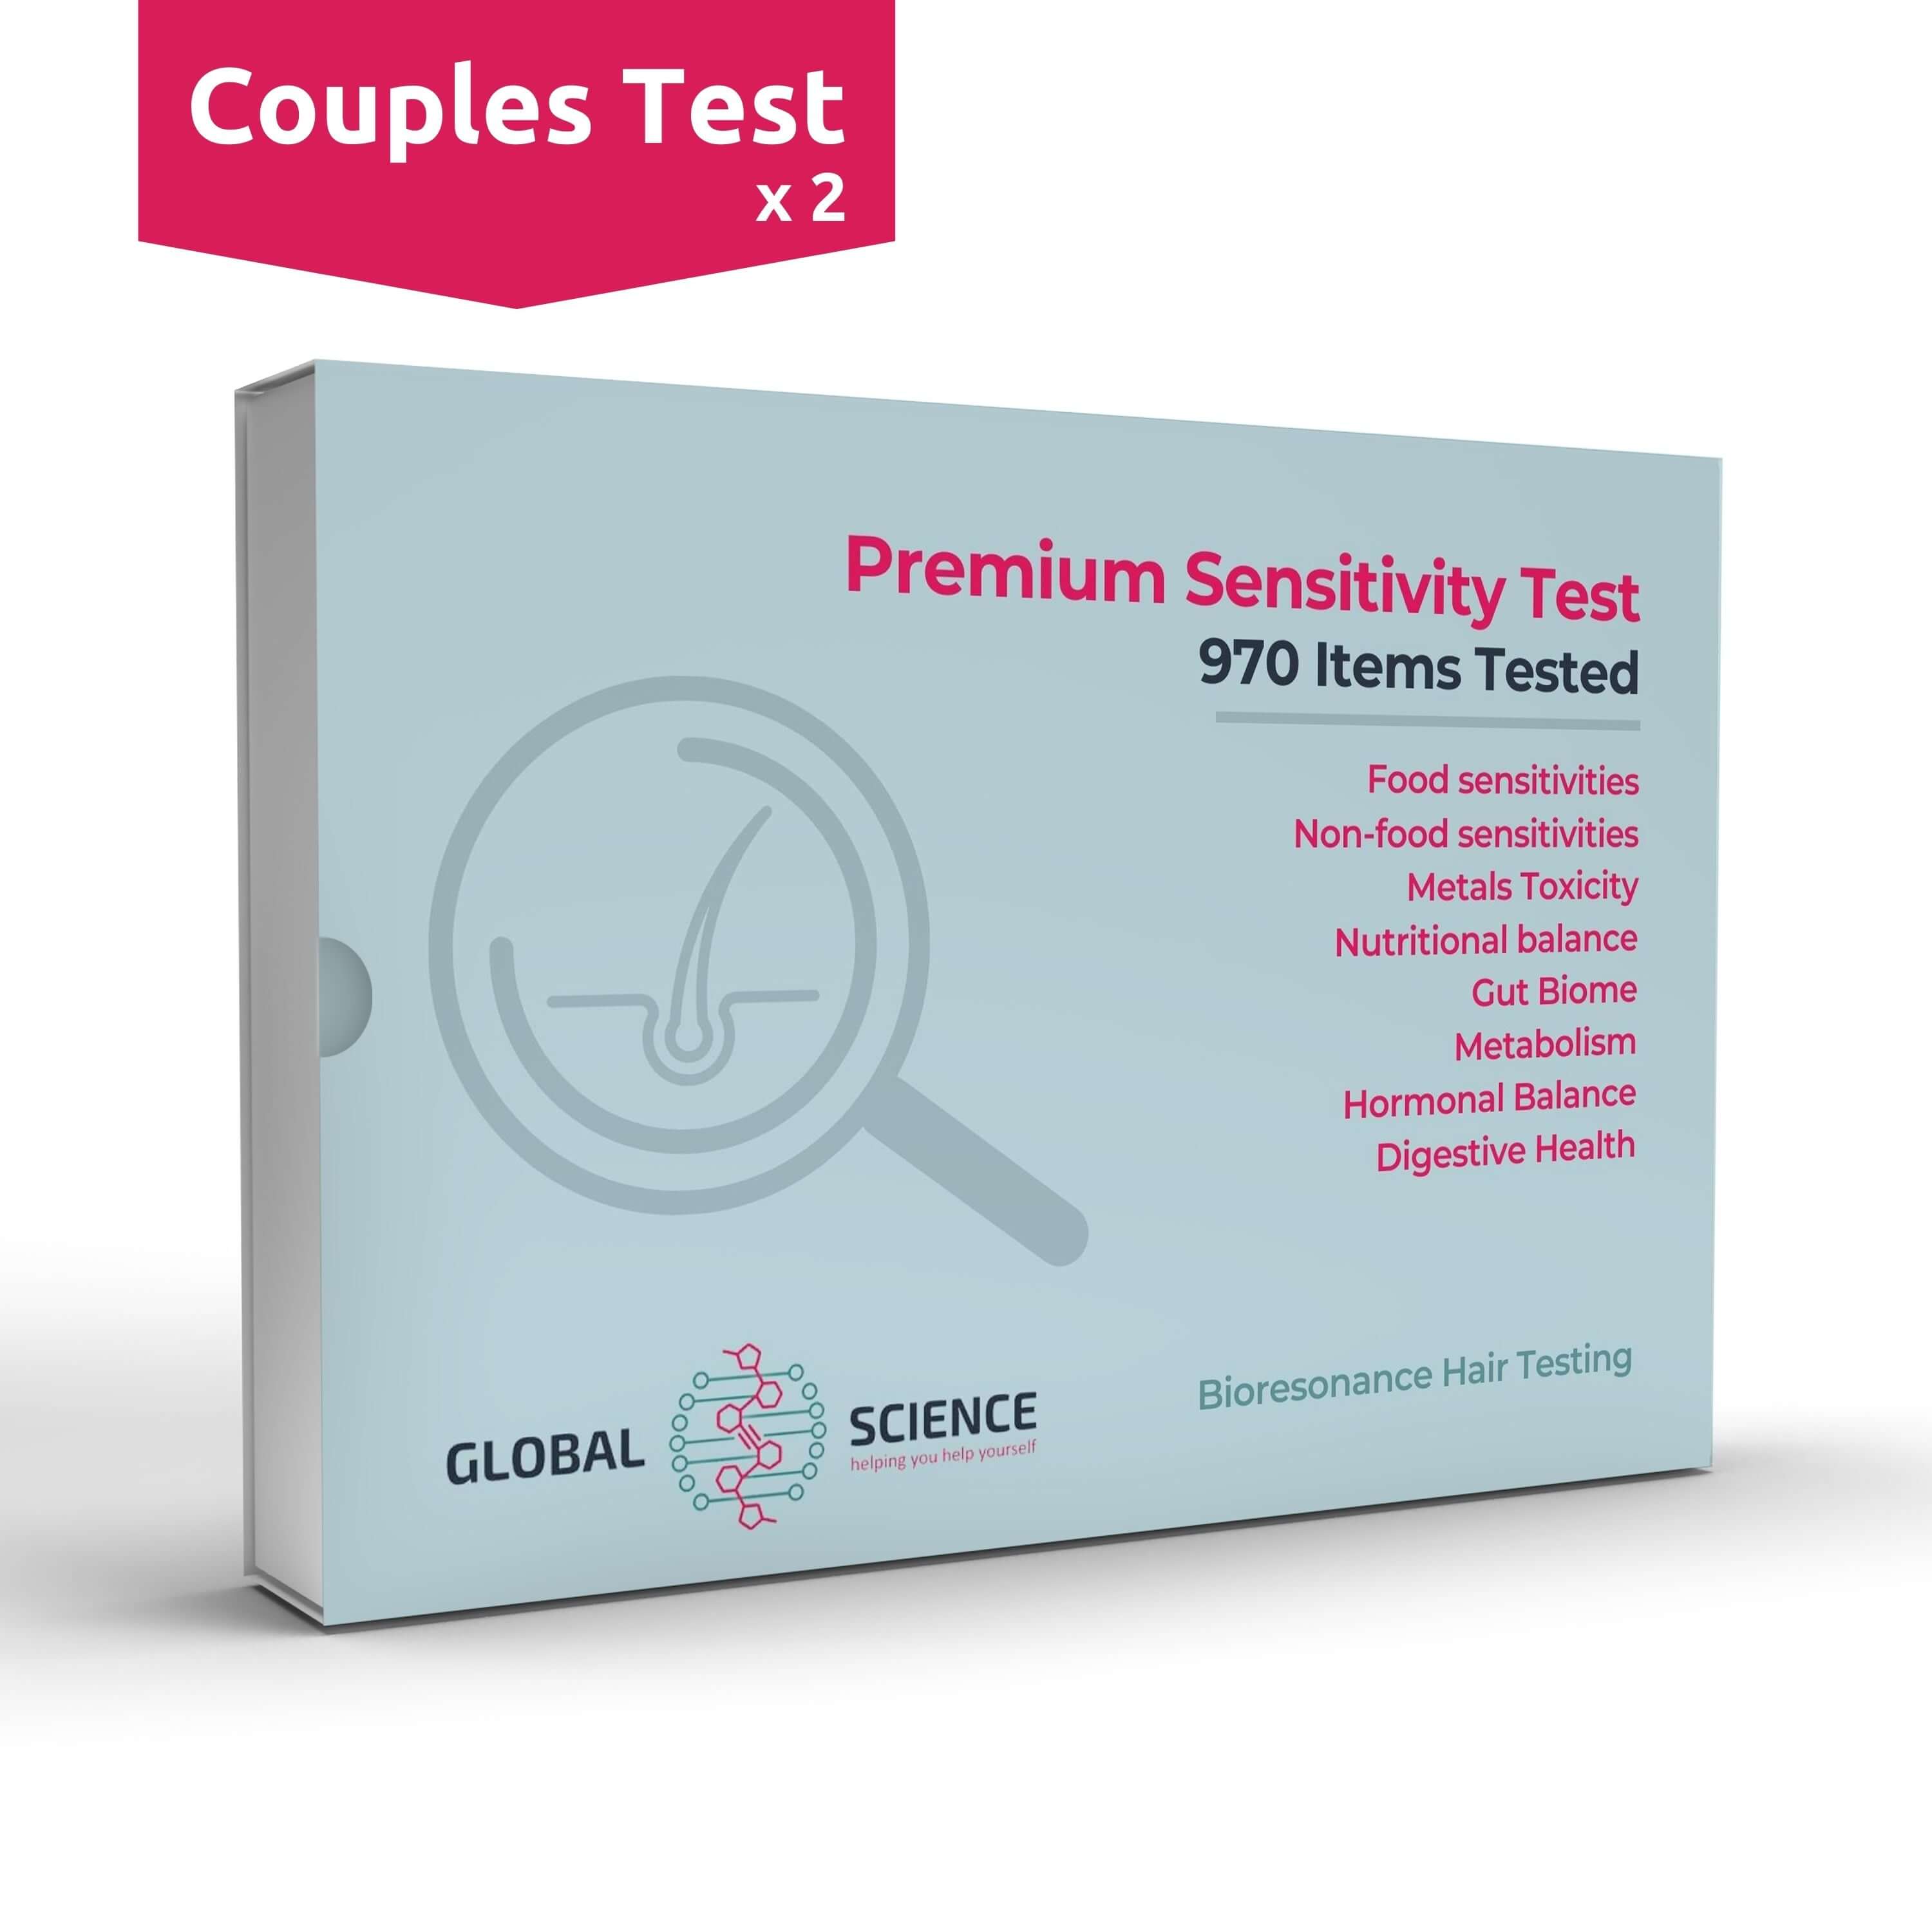 Premium Sensitivity 970 Mock Up Kit Couples - Meat Allergy